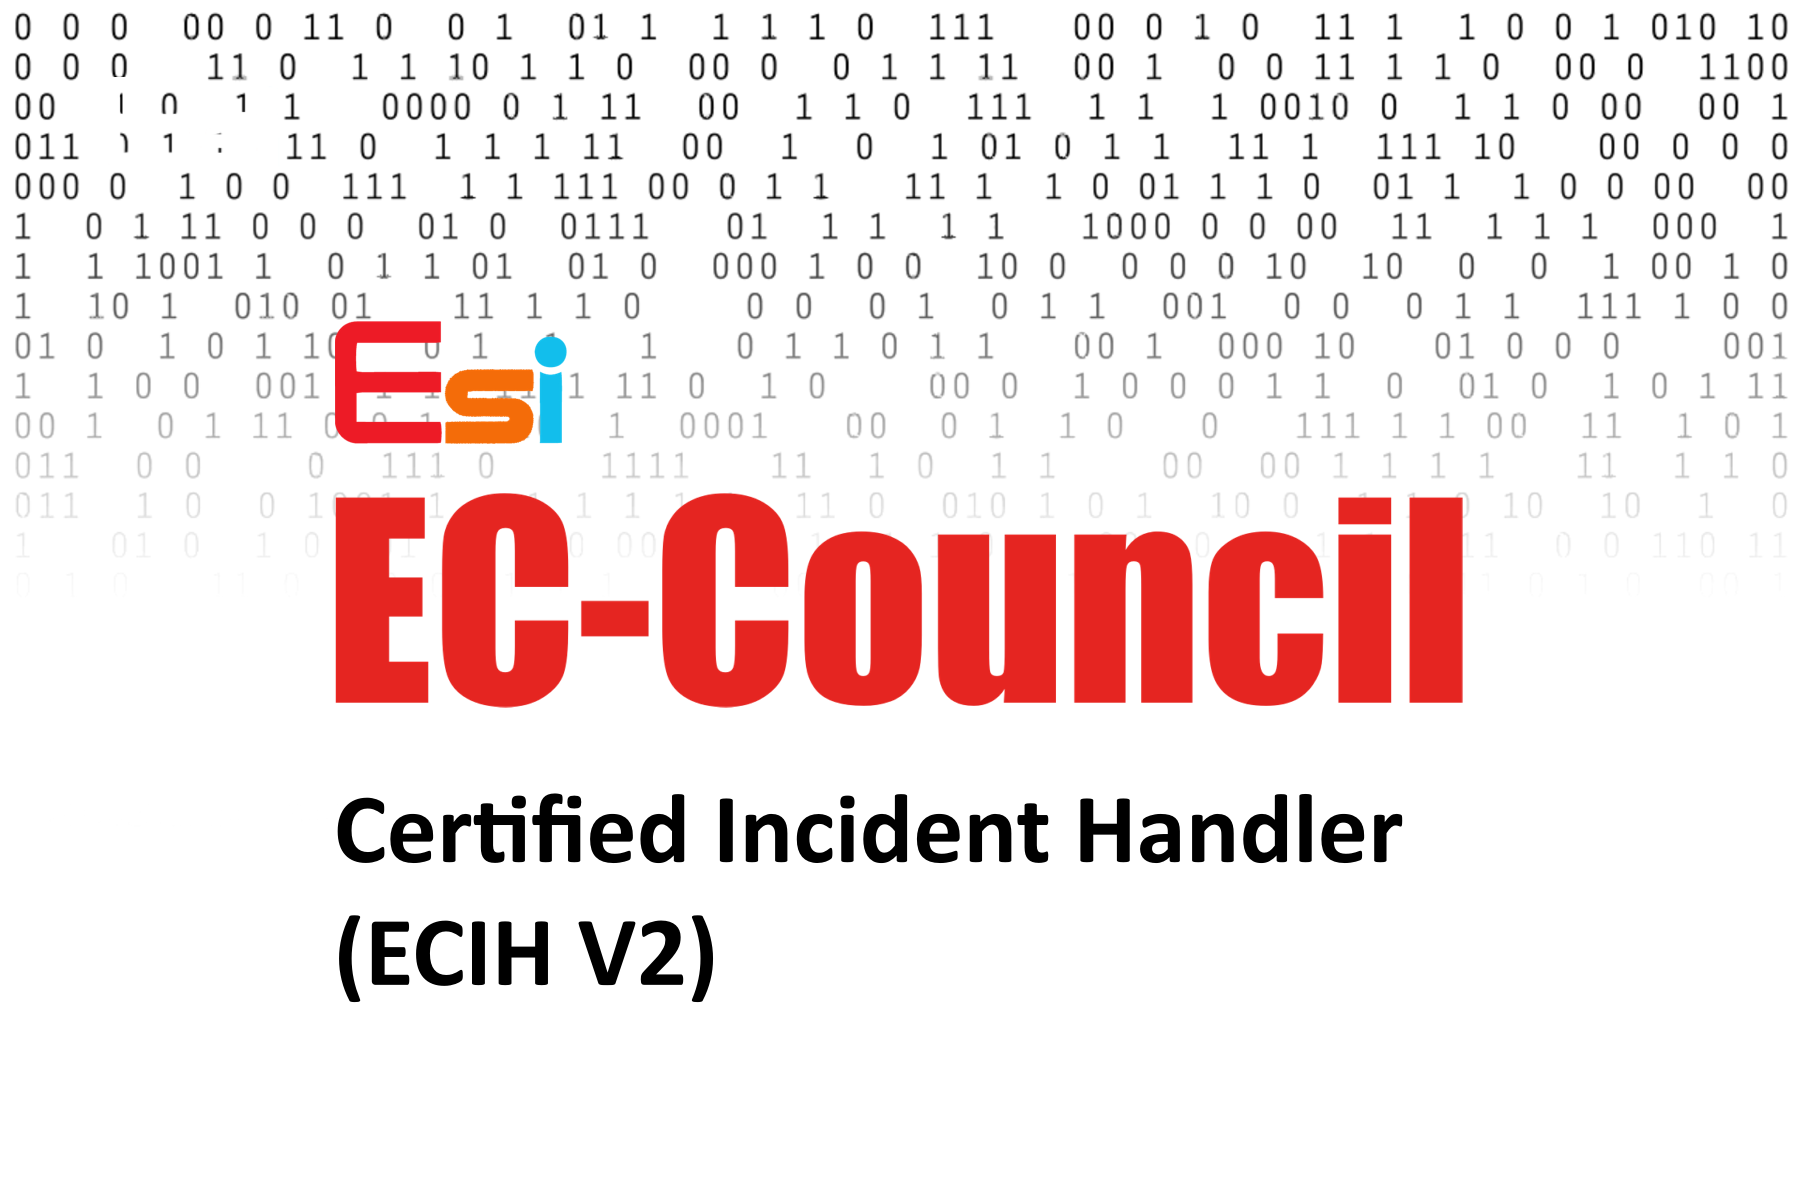 EC-Council Certified Incident Handler (ECIH V2) Course